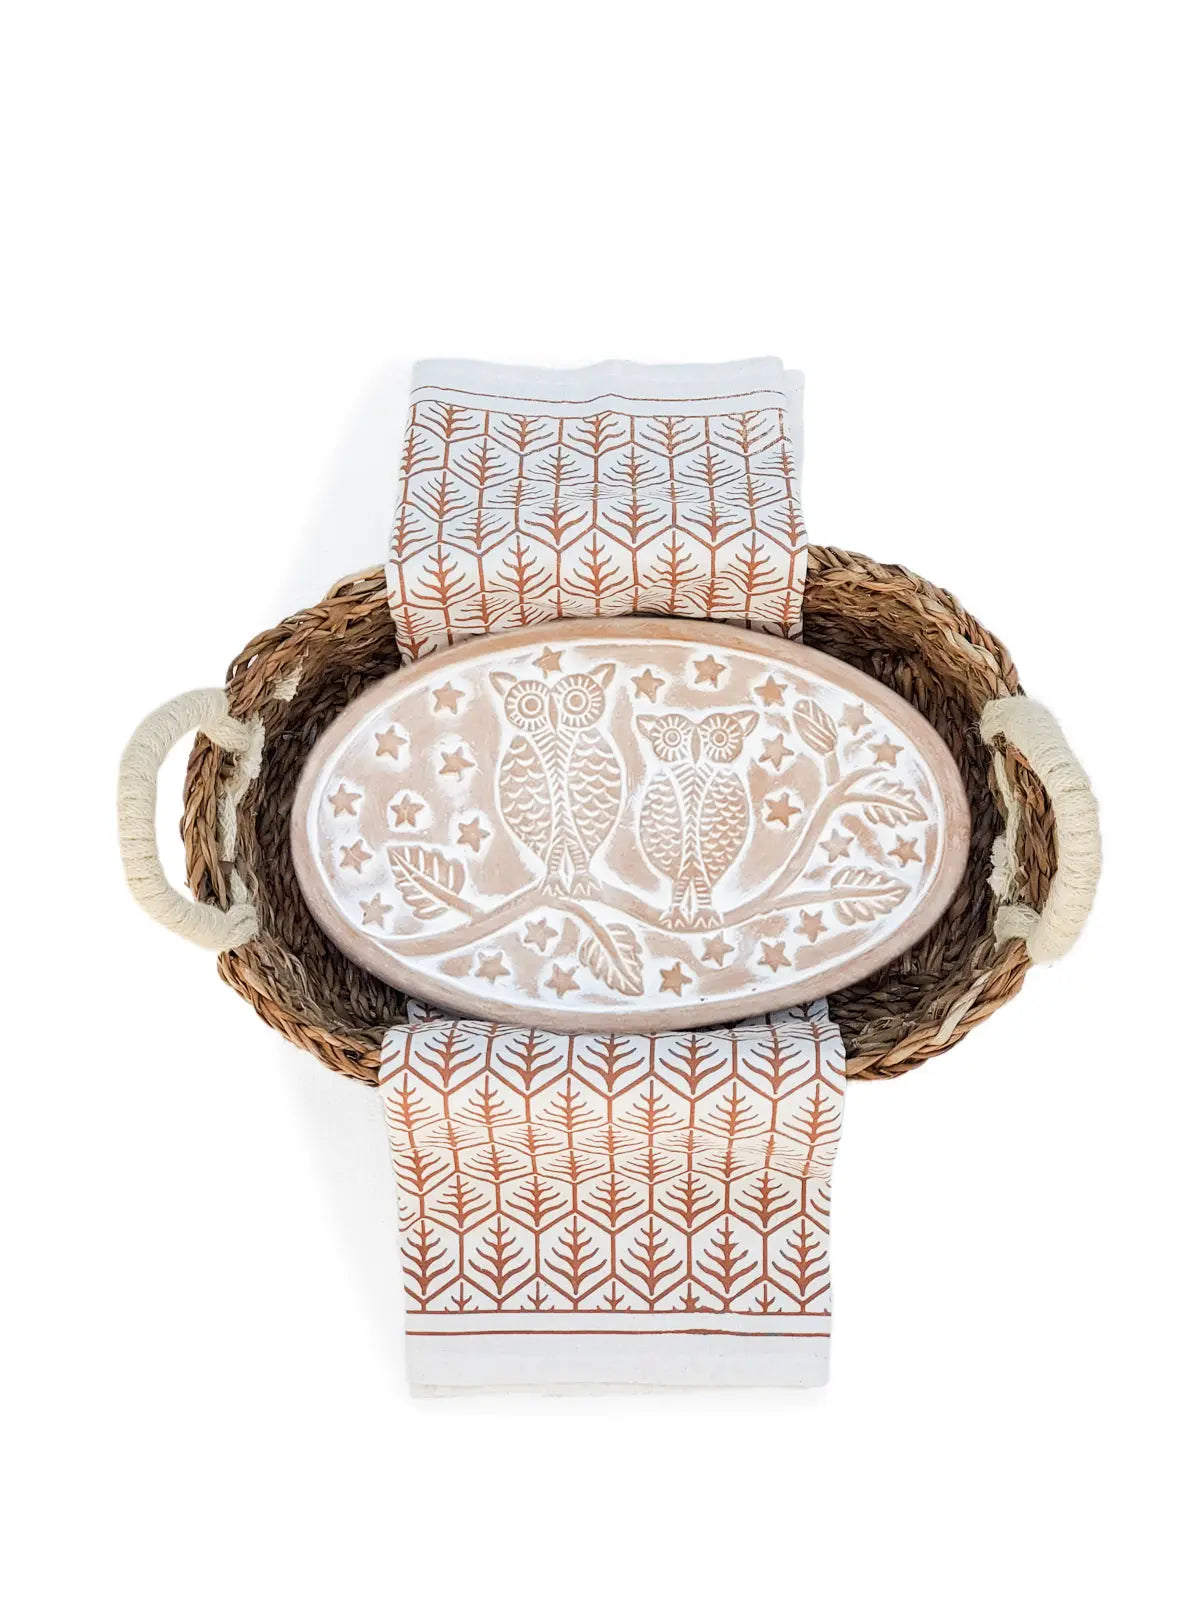 Bread Warmer & Basket Gift Set with Tea Towel - Owl Oval KORISSA